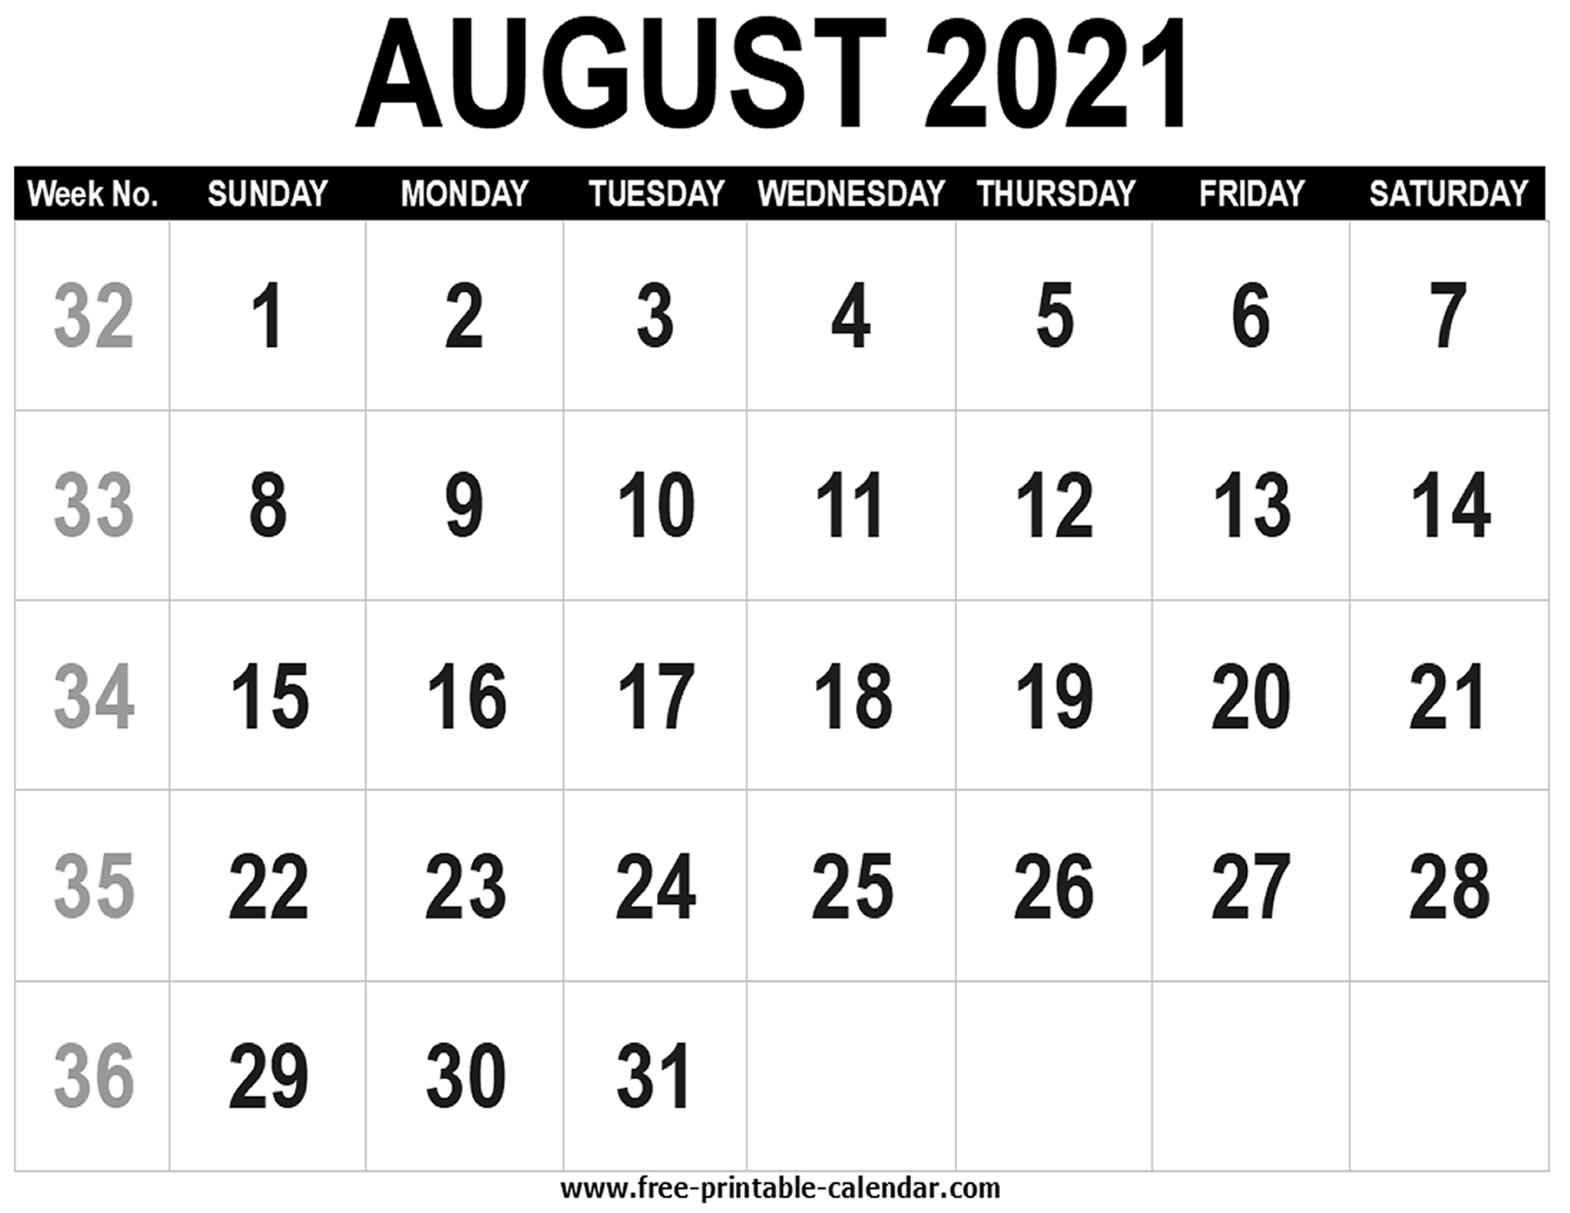 Blank Calendar 2021 August - Free-Printable-Calendar August 2021 Calendar Template Word